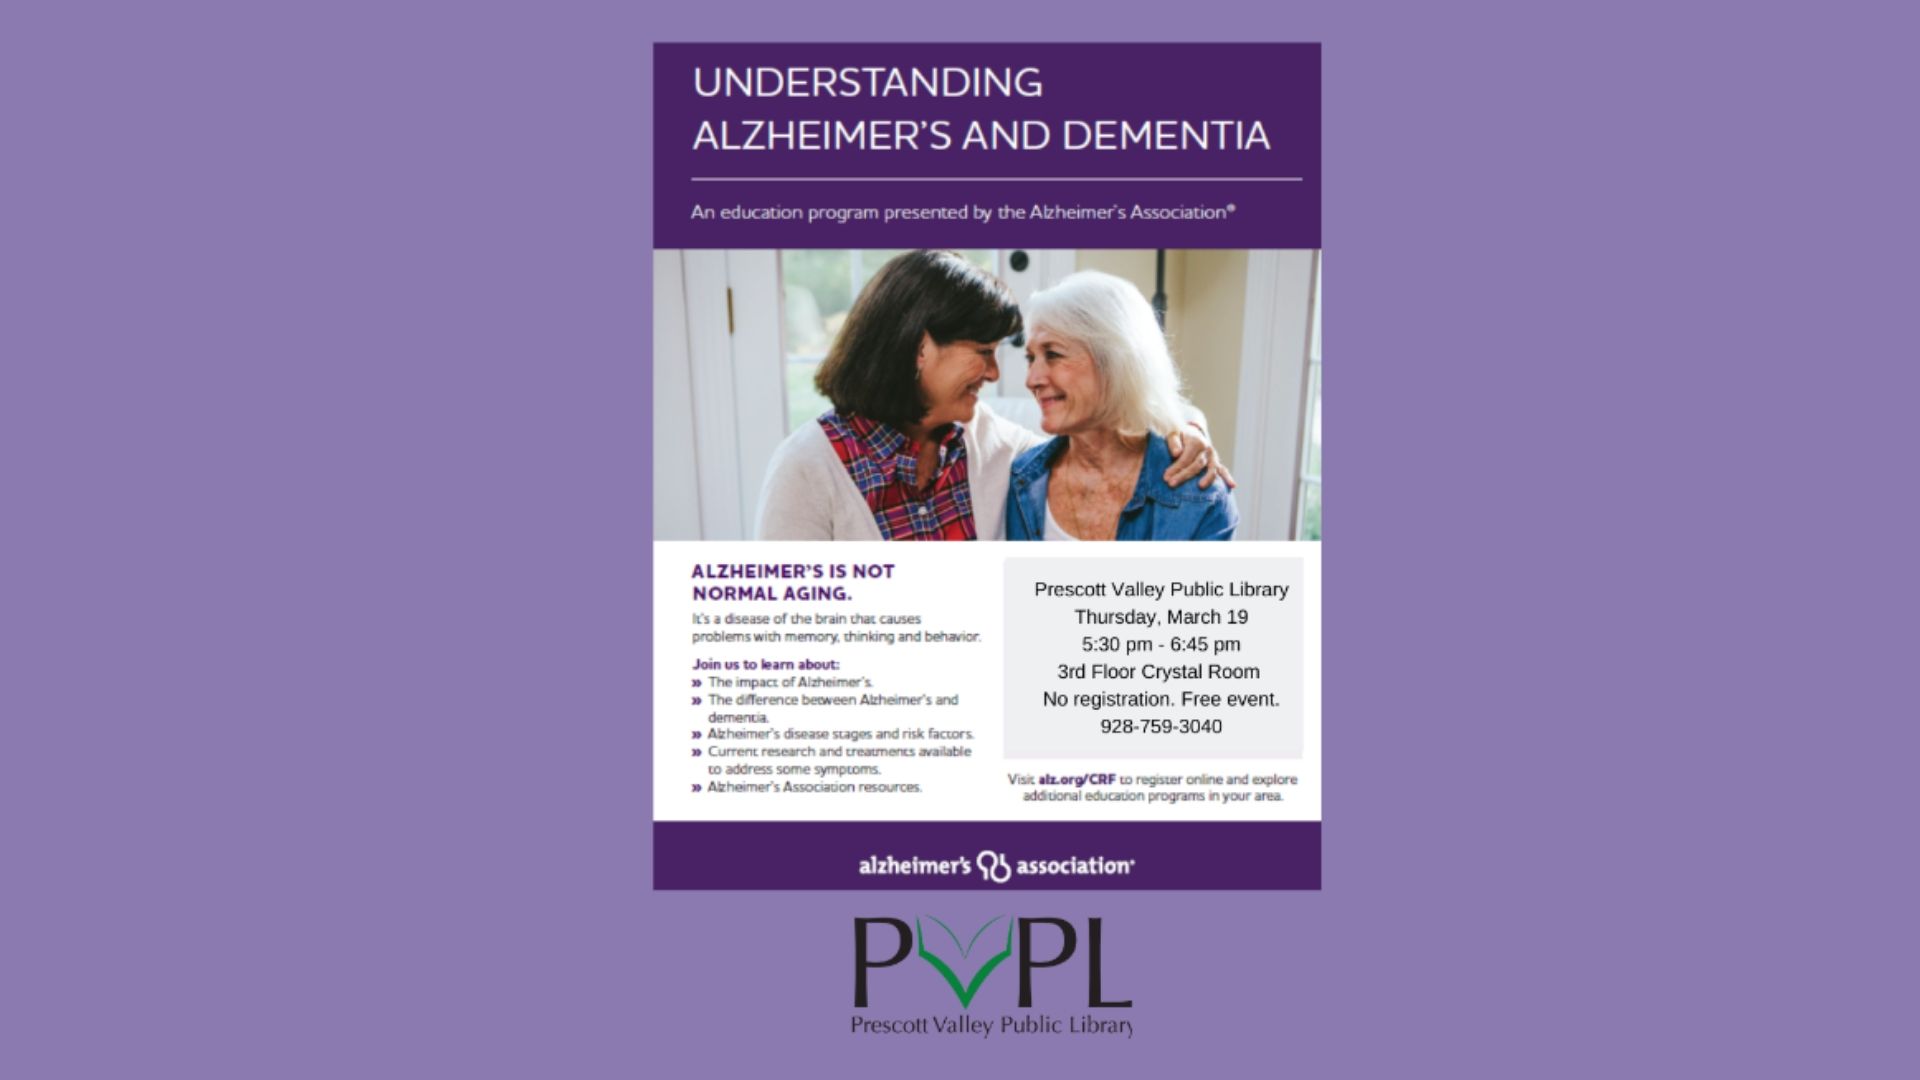 Prescott Valley Public Library – New Event - Alzheimer's Presentation- Understanding Alzheimer’s and Dementia 